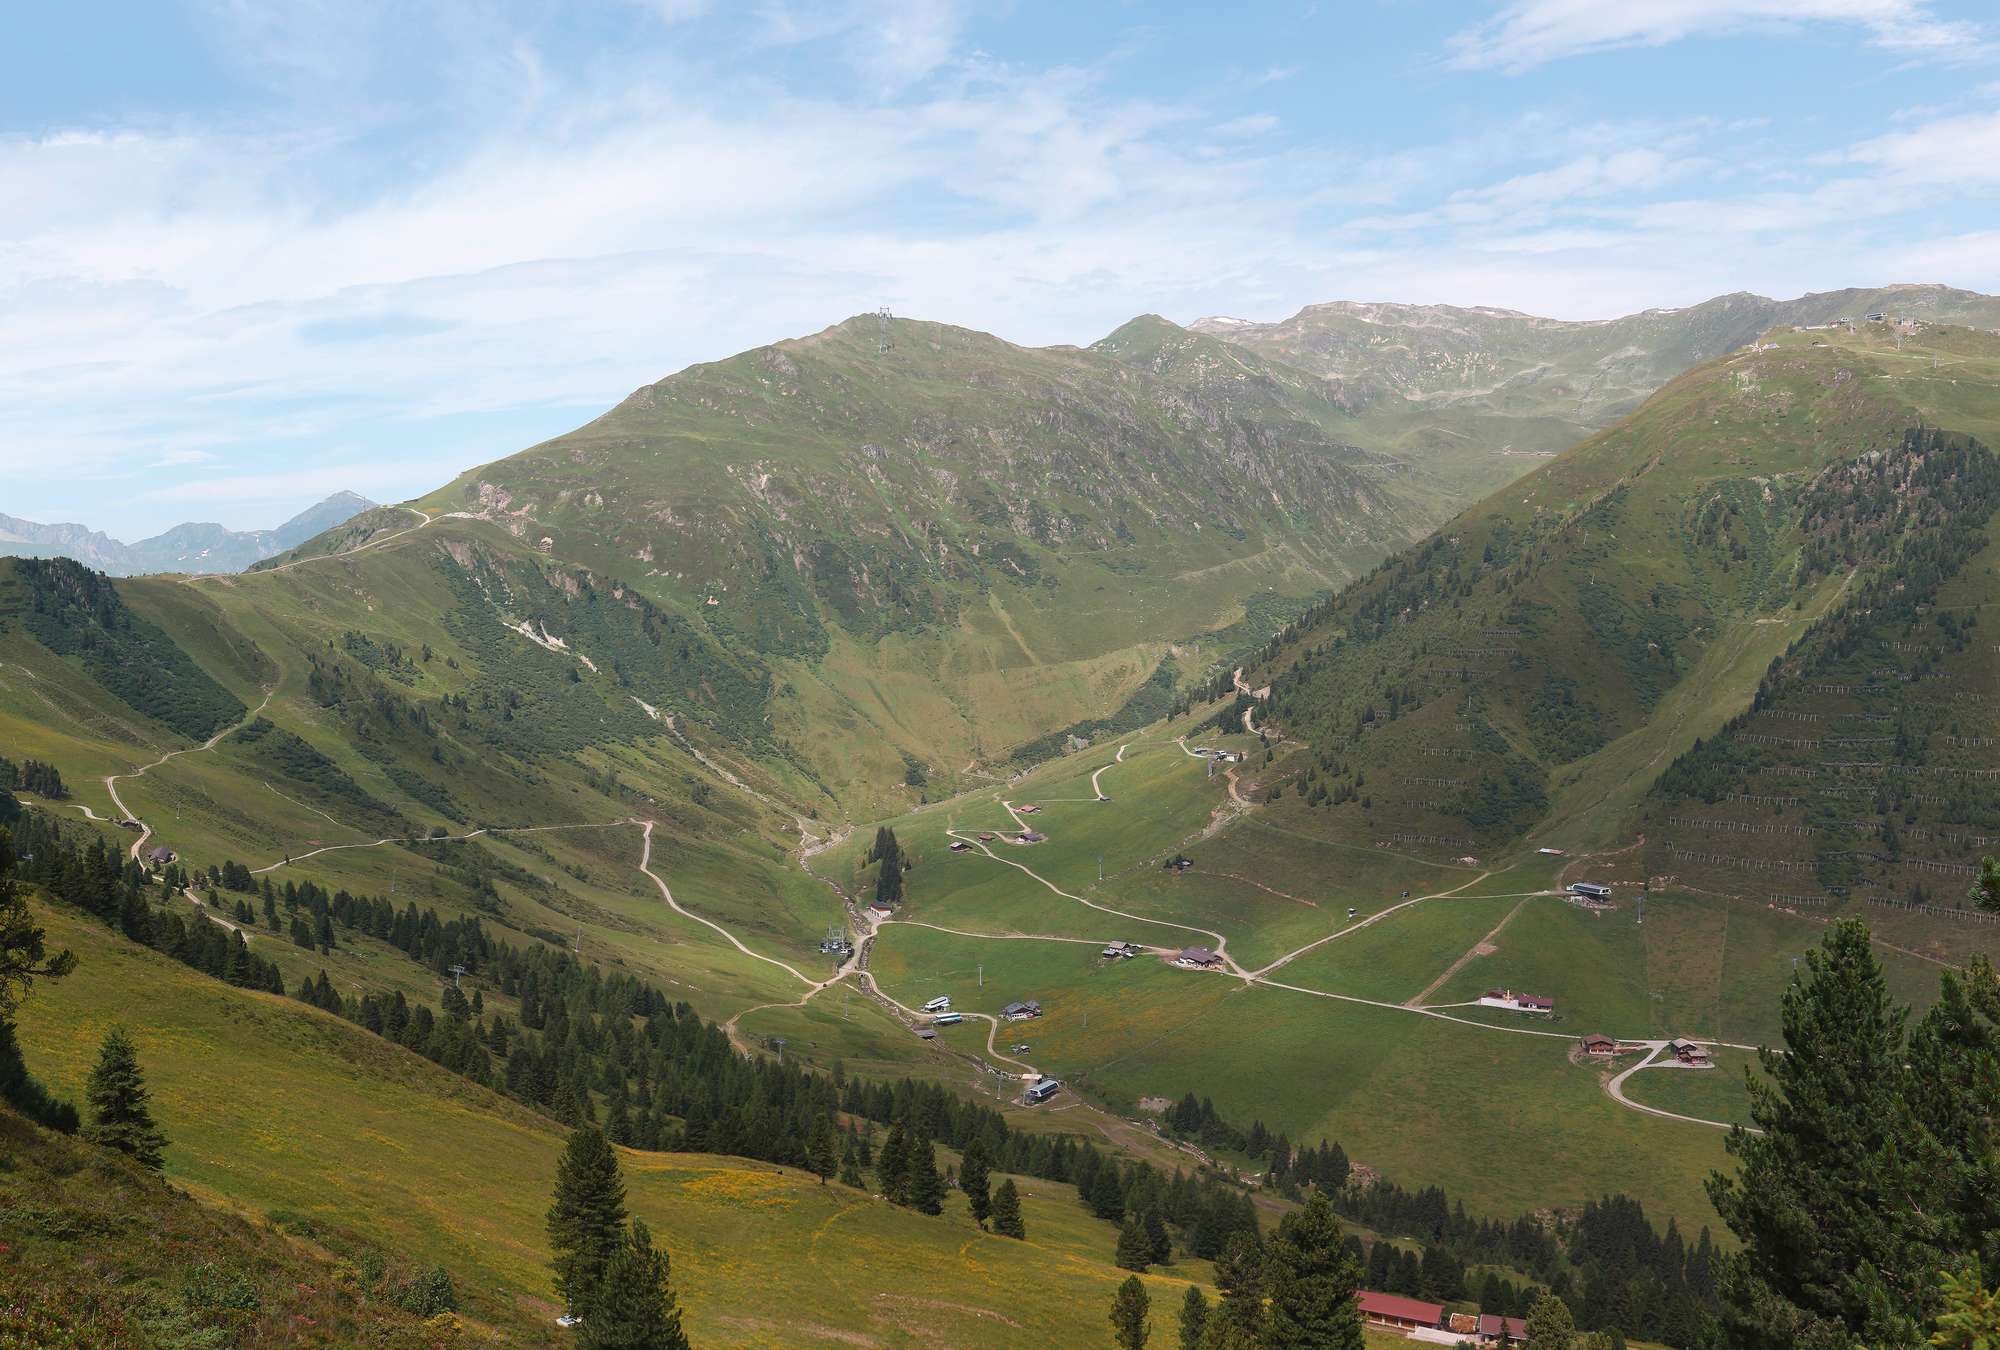             Fototapeten Talblick auf grüne Wiesen in den Alpen
        